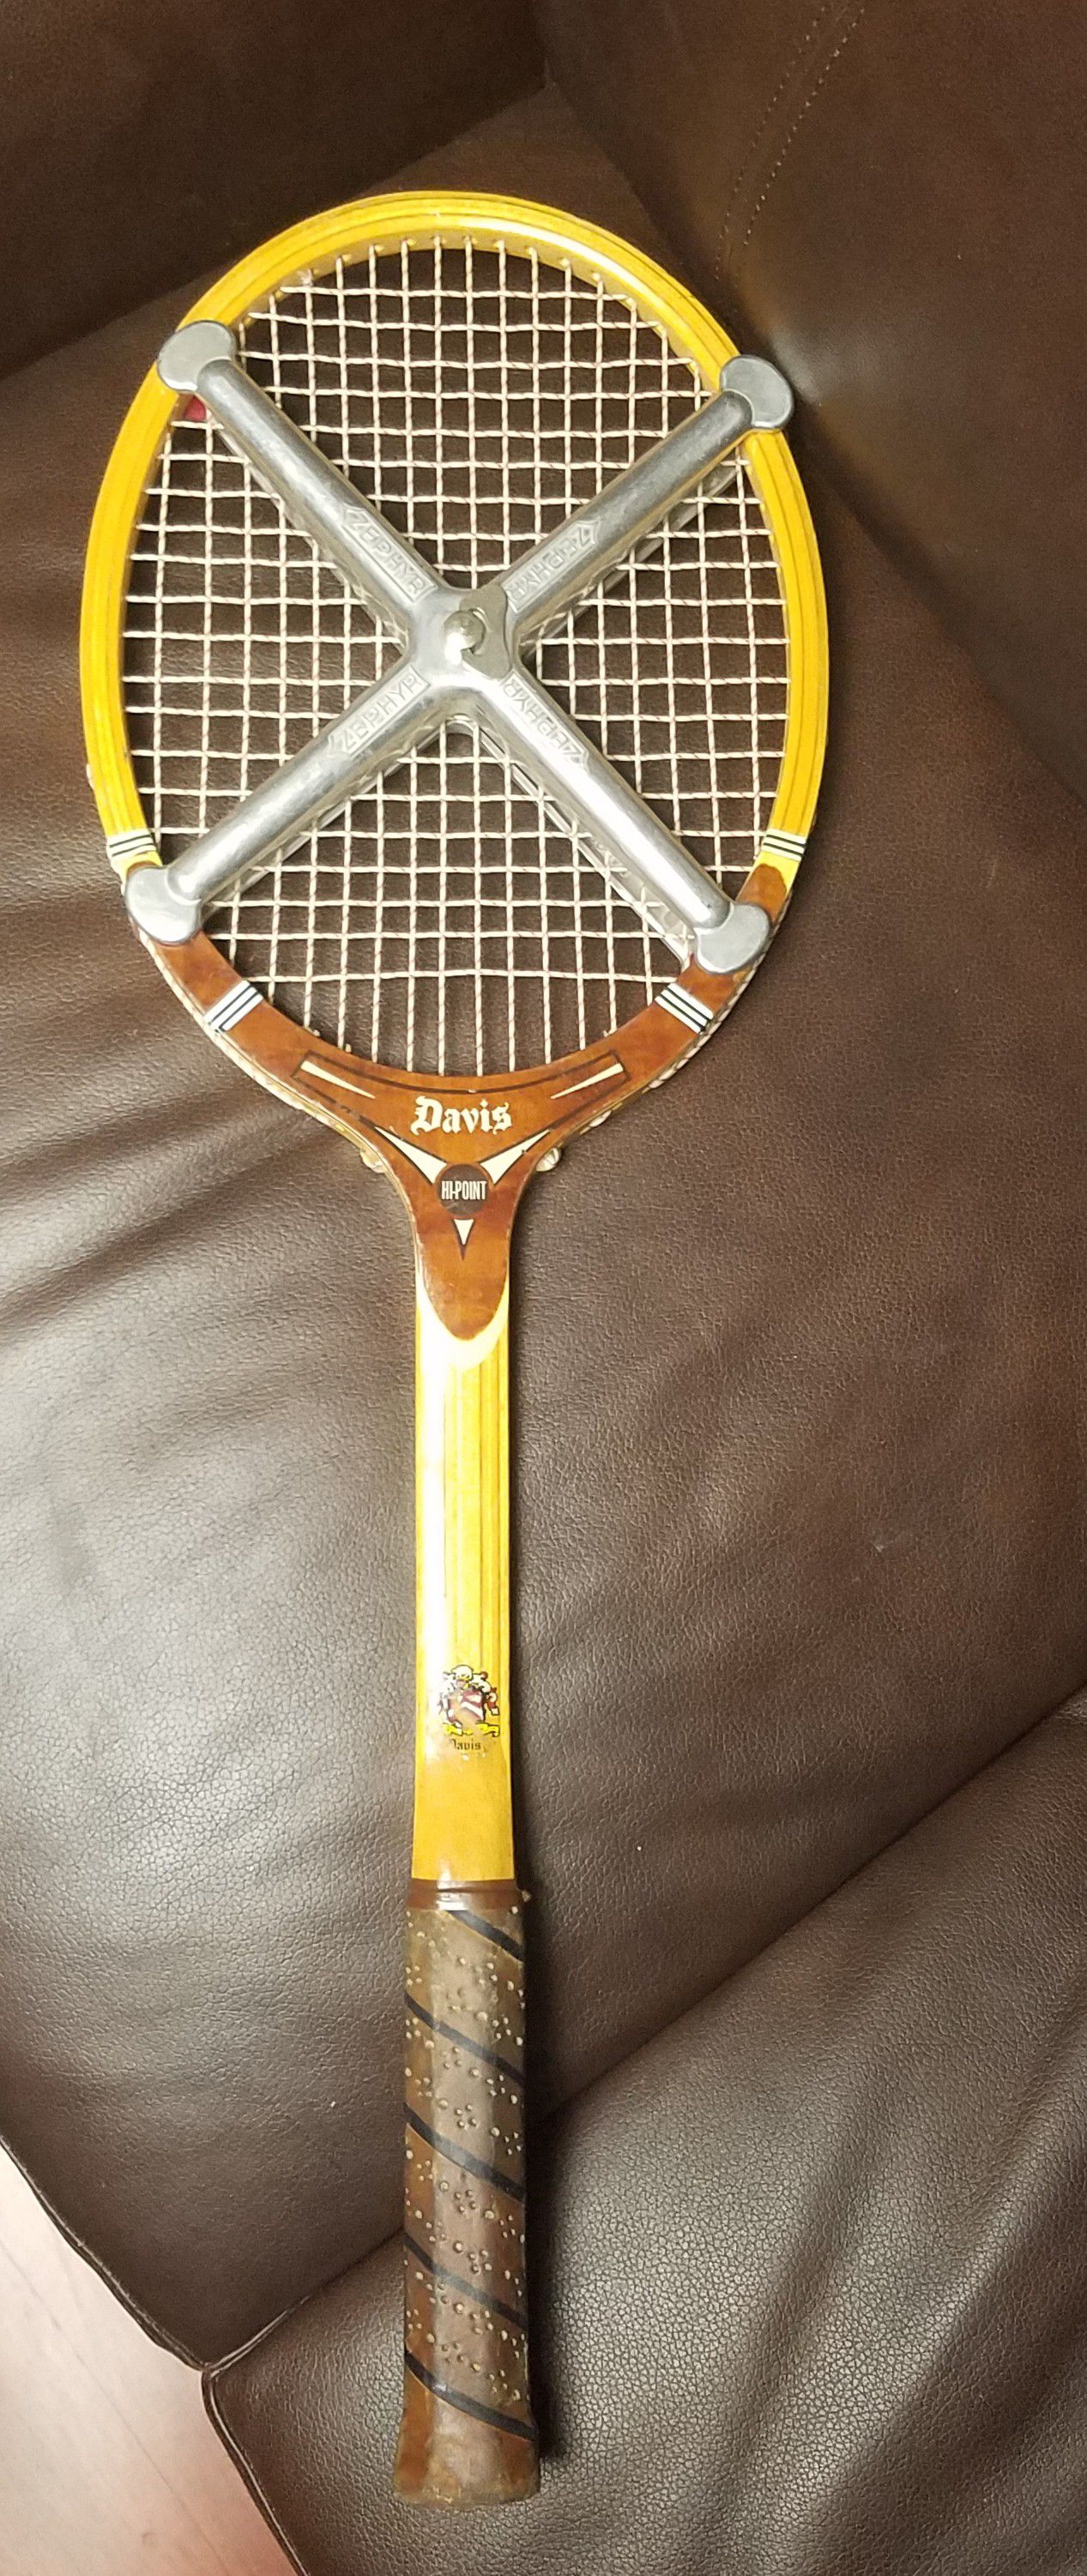 Davis wooden Hi-point tennis racket